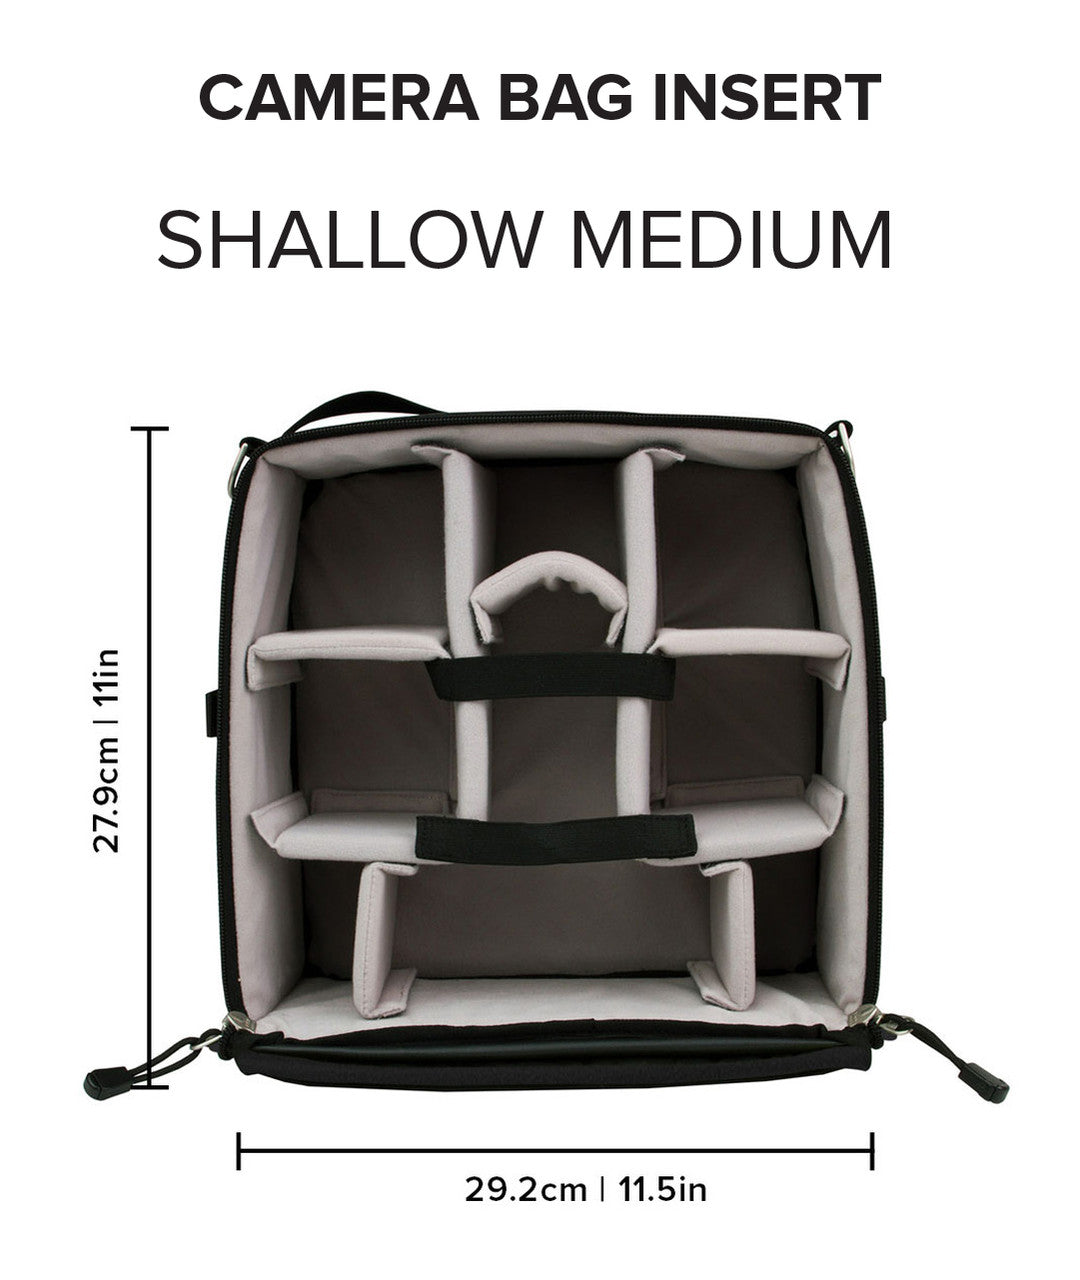 ICU - Shallow Medium Camera Bag Insert and Cube